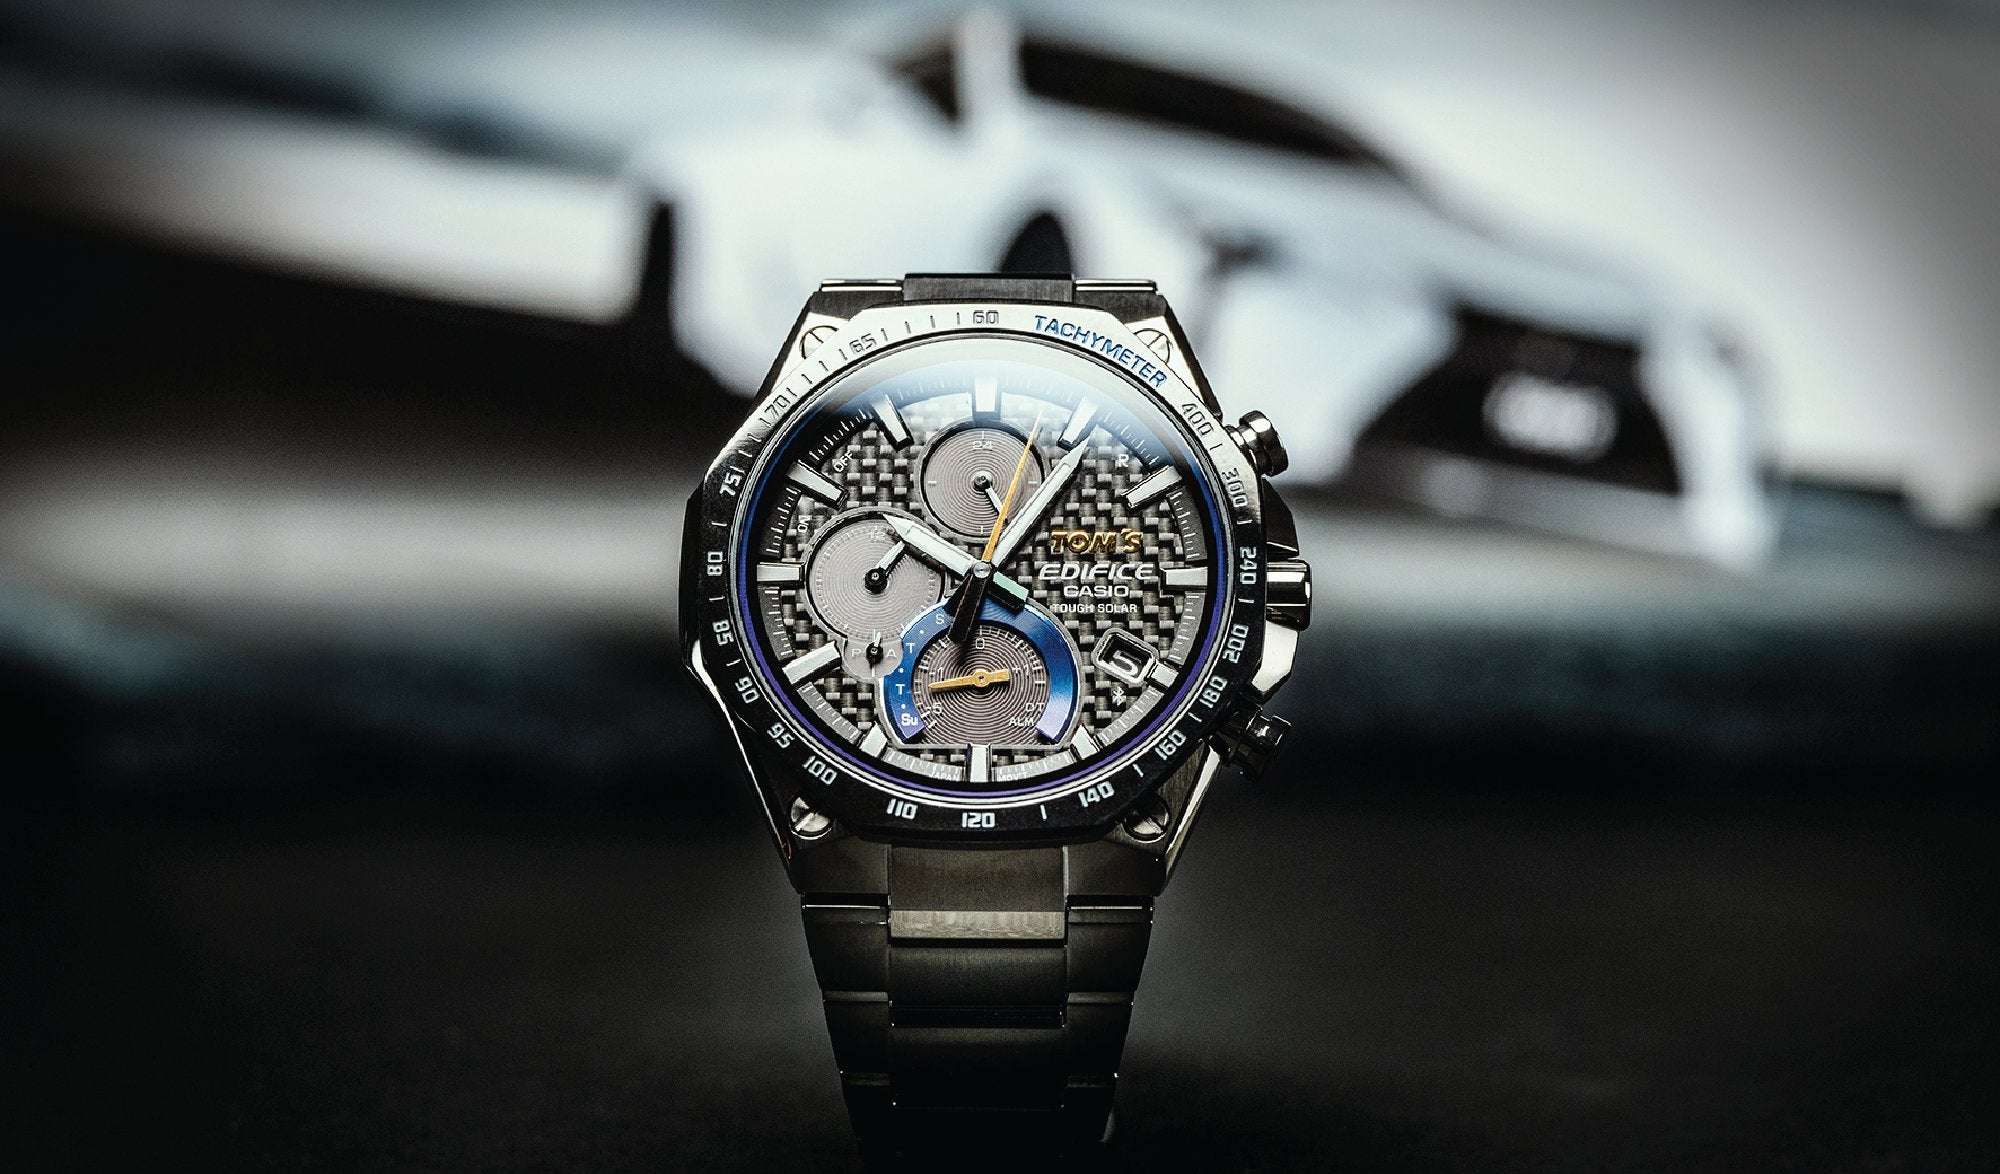 Casio watch Edifice watch men brand luxury quartz Waterproof Chronograph  men watch racing Sport military Watch relogio masculino - AliExpress